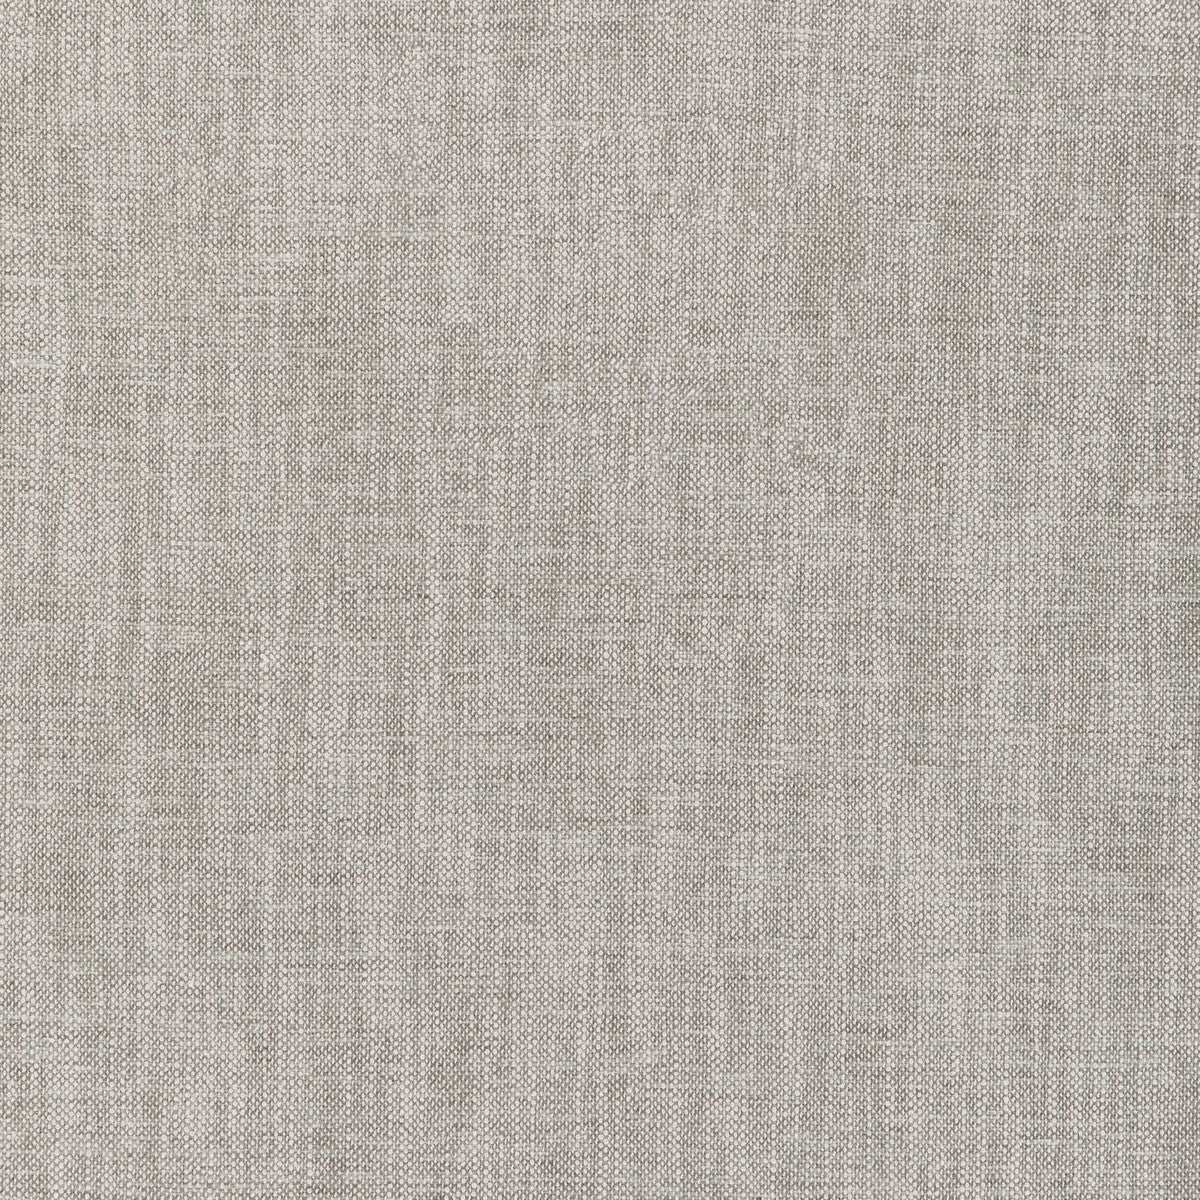 Kravet Smart fabric in 36672-16 color - pattern 36672.16.0 - by Kravet Smart in the Performance Kravetarmor collection